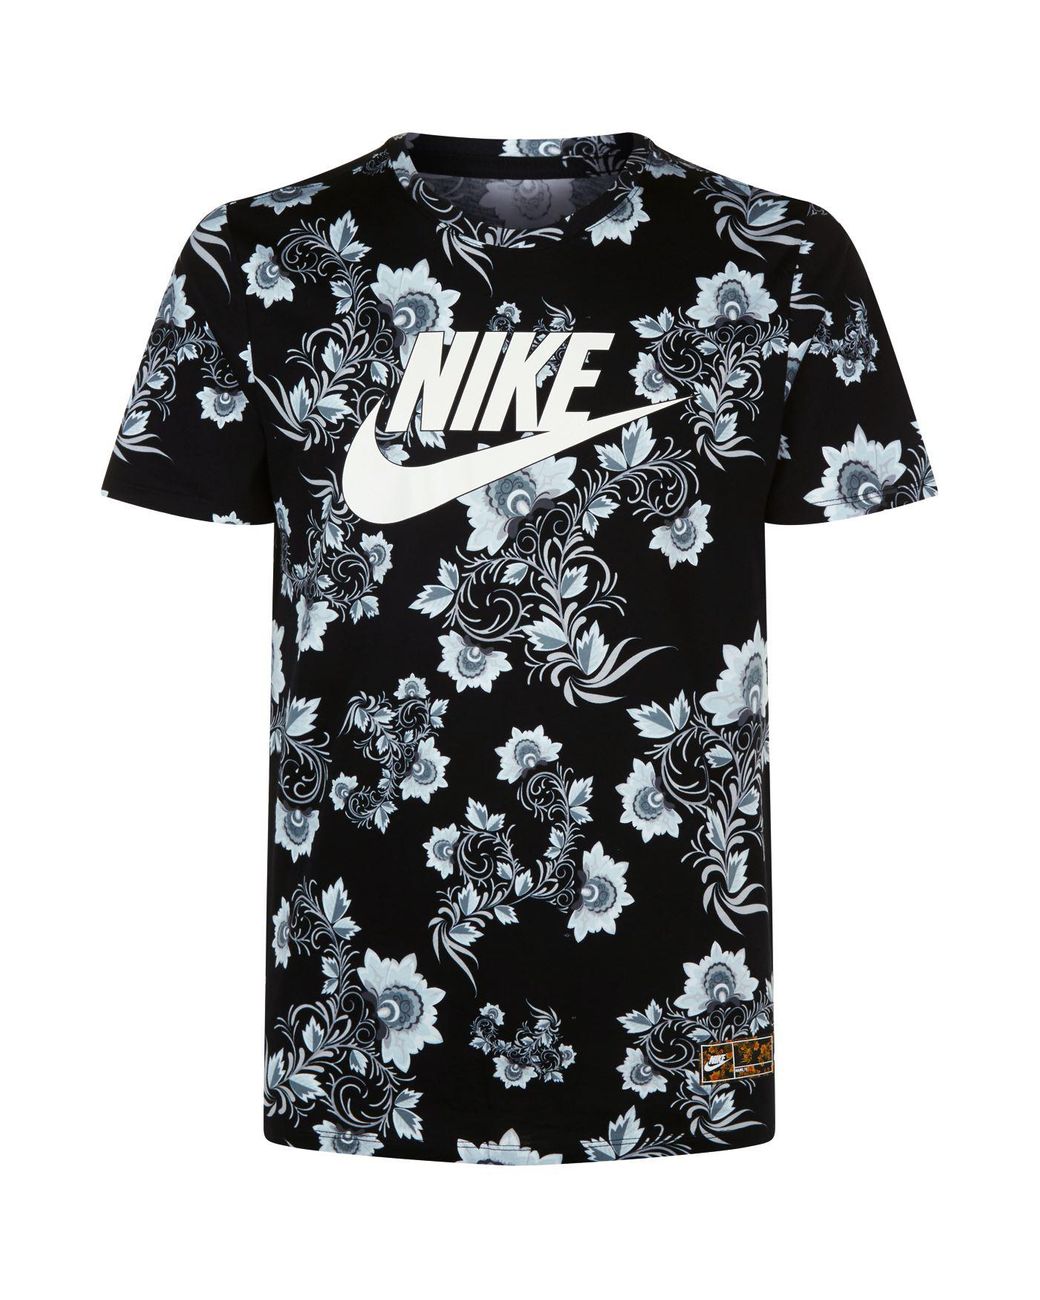 Nike Floral Print T-shirt, Black, M for Men | Lyst